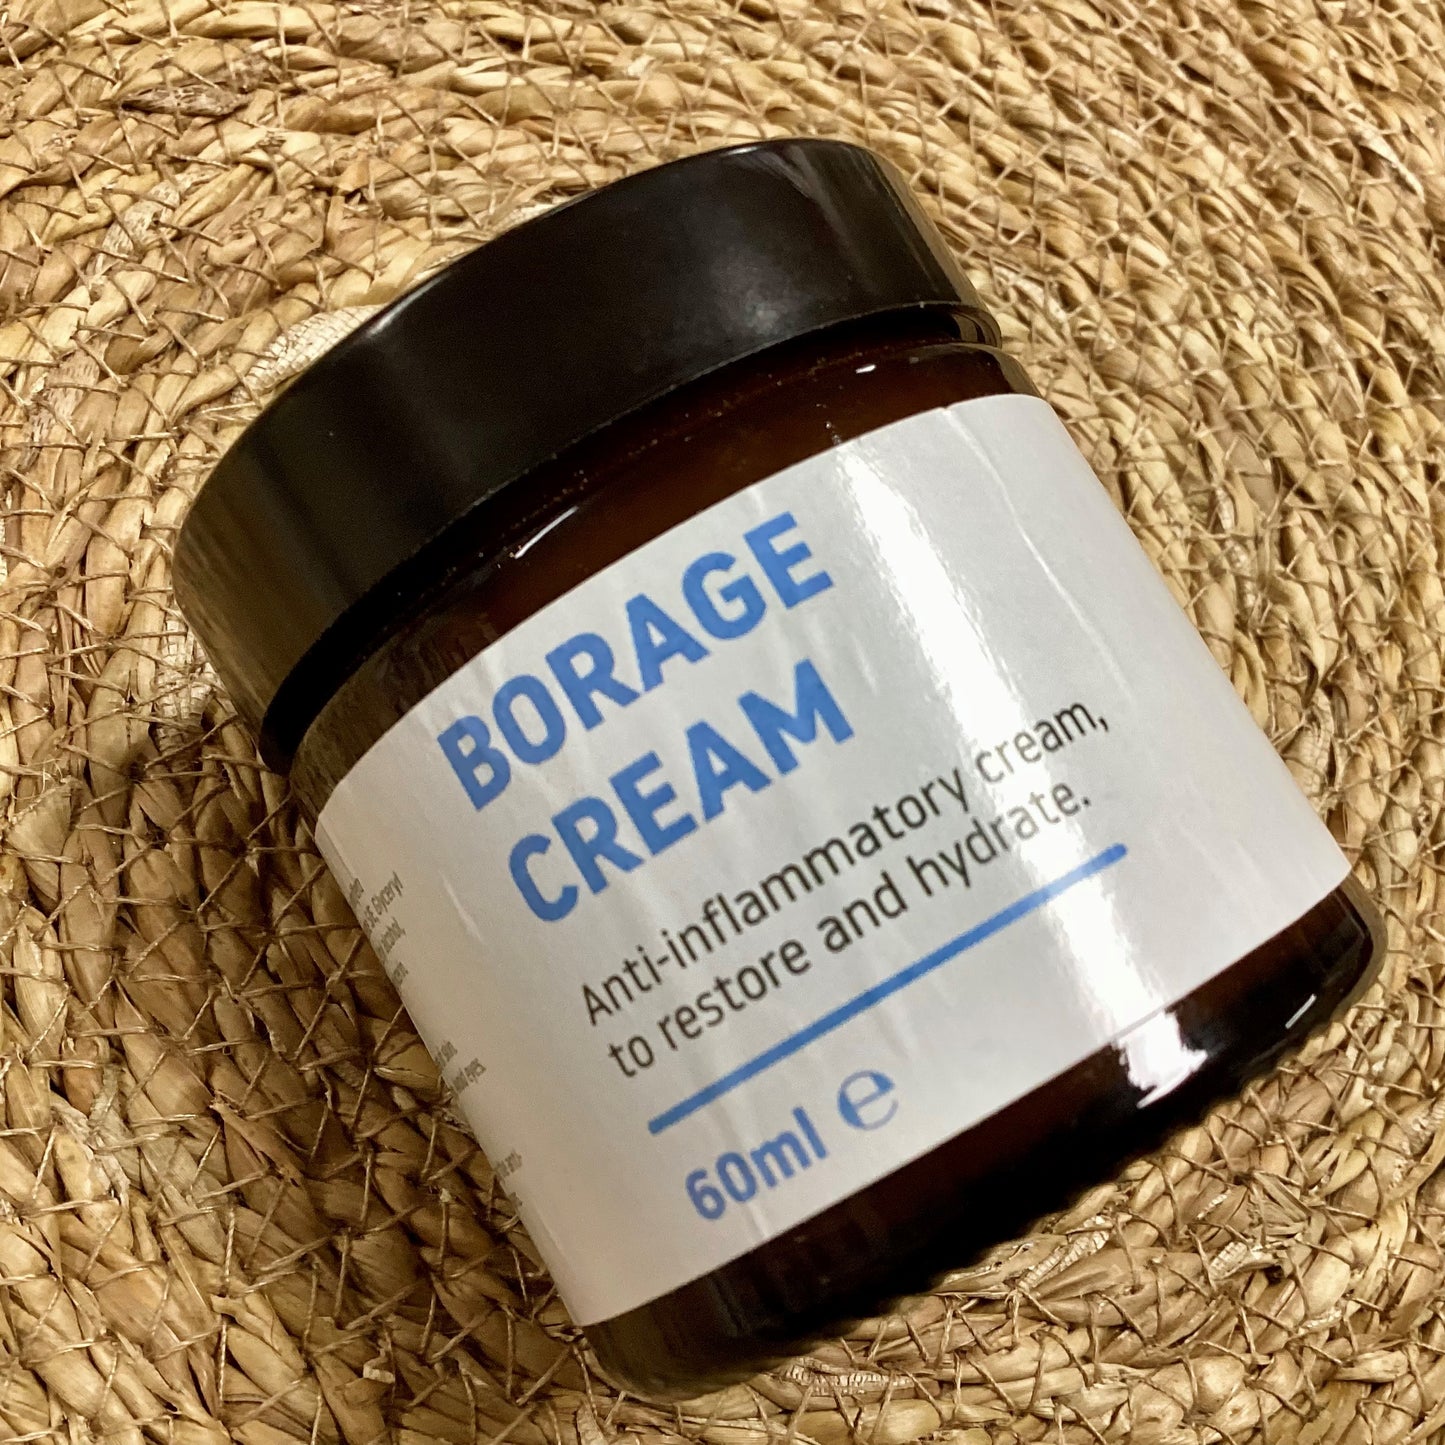 Nature's Laboratory Borage Cream 60ml